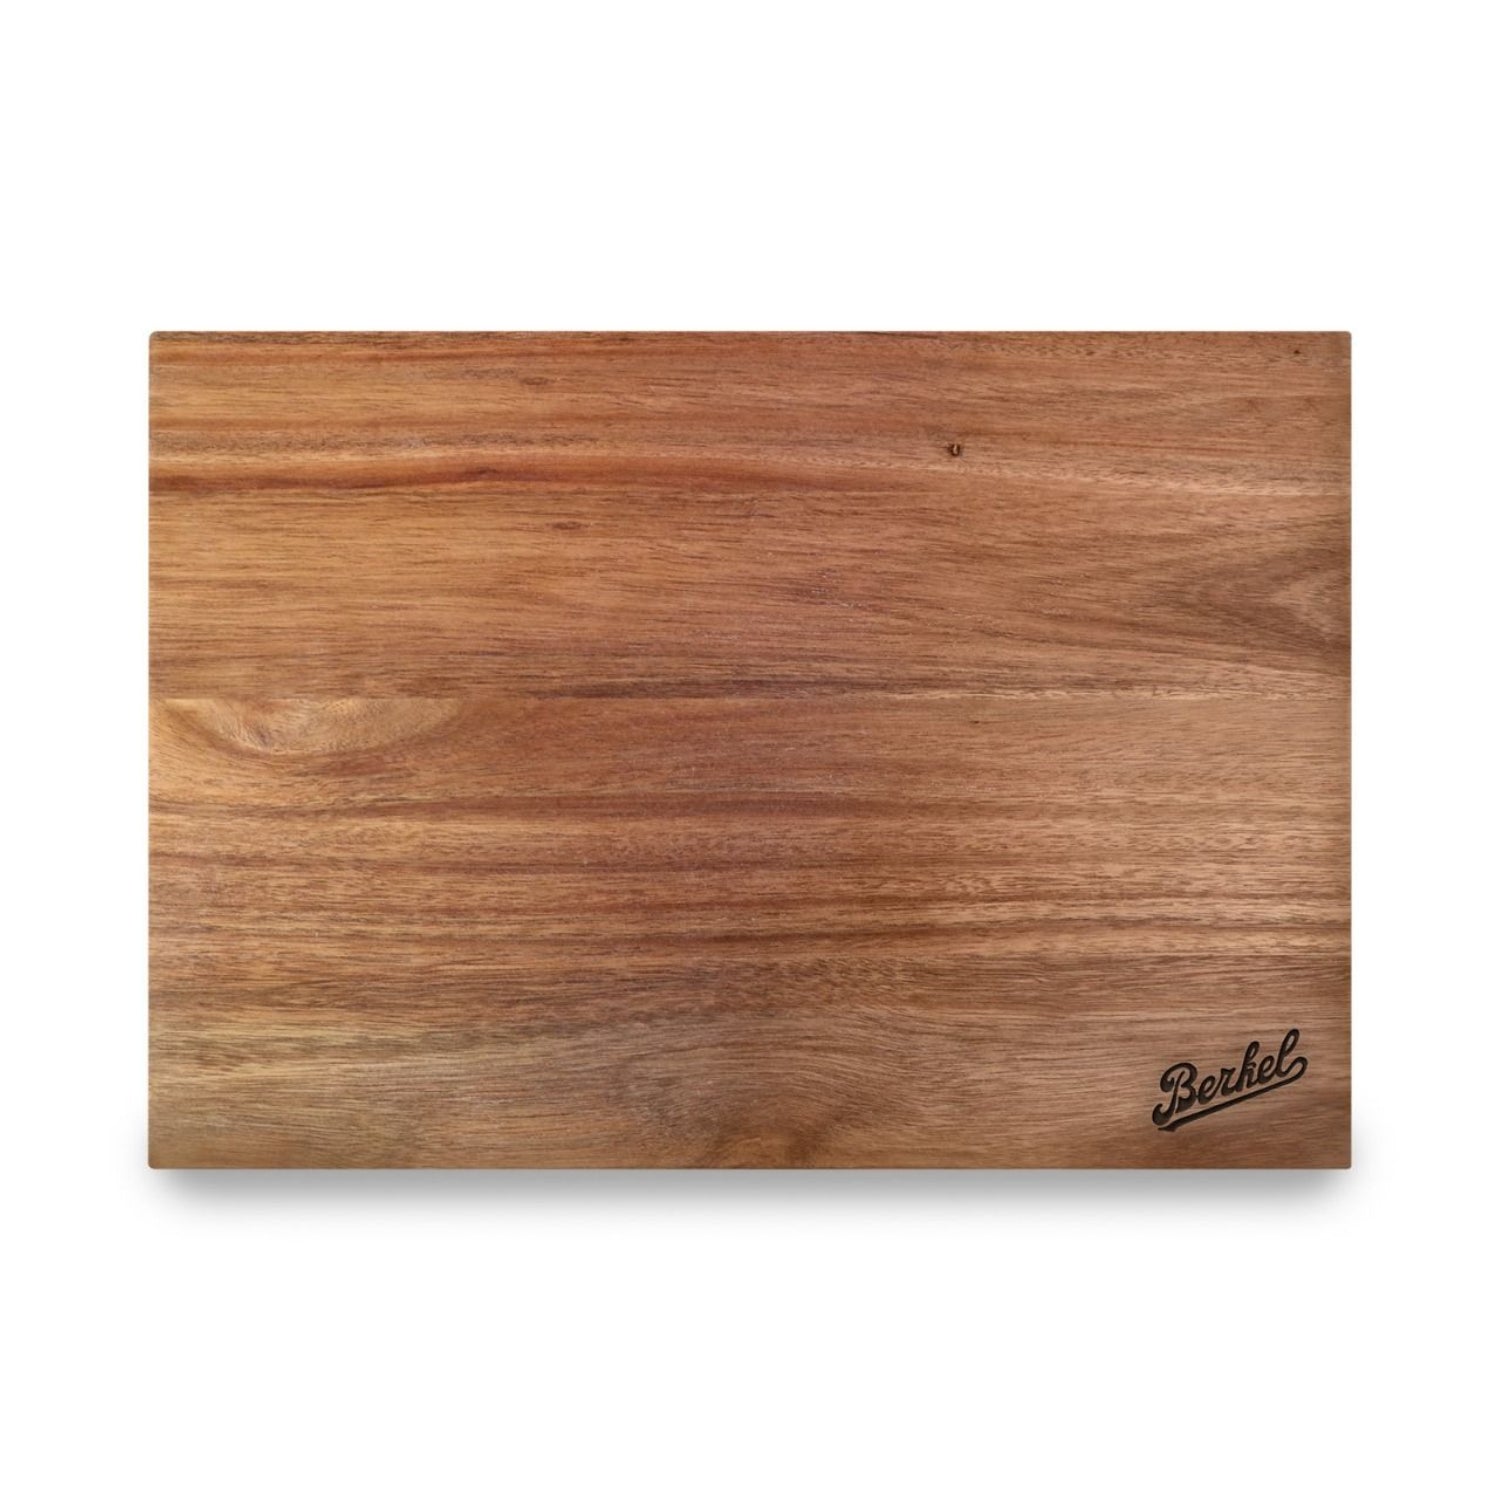 Berkel Cutting board in Acacia wood